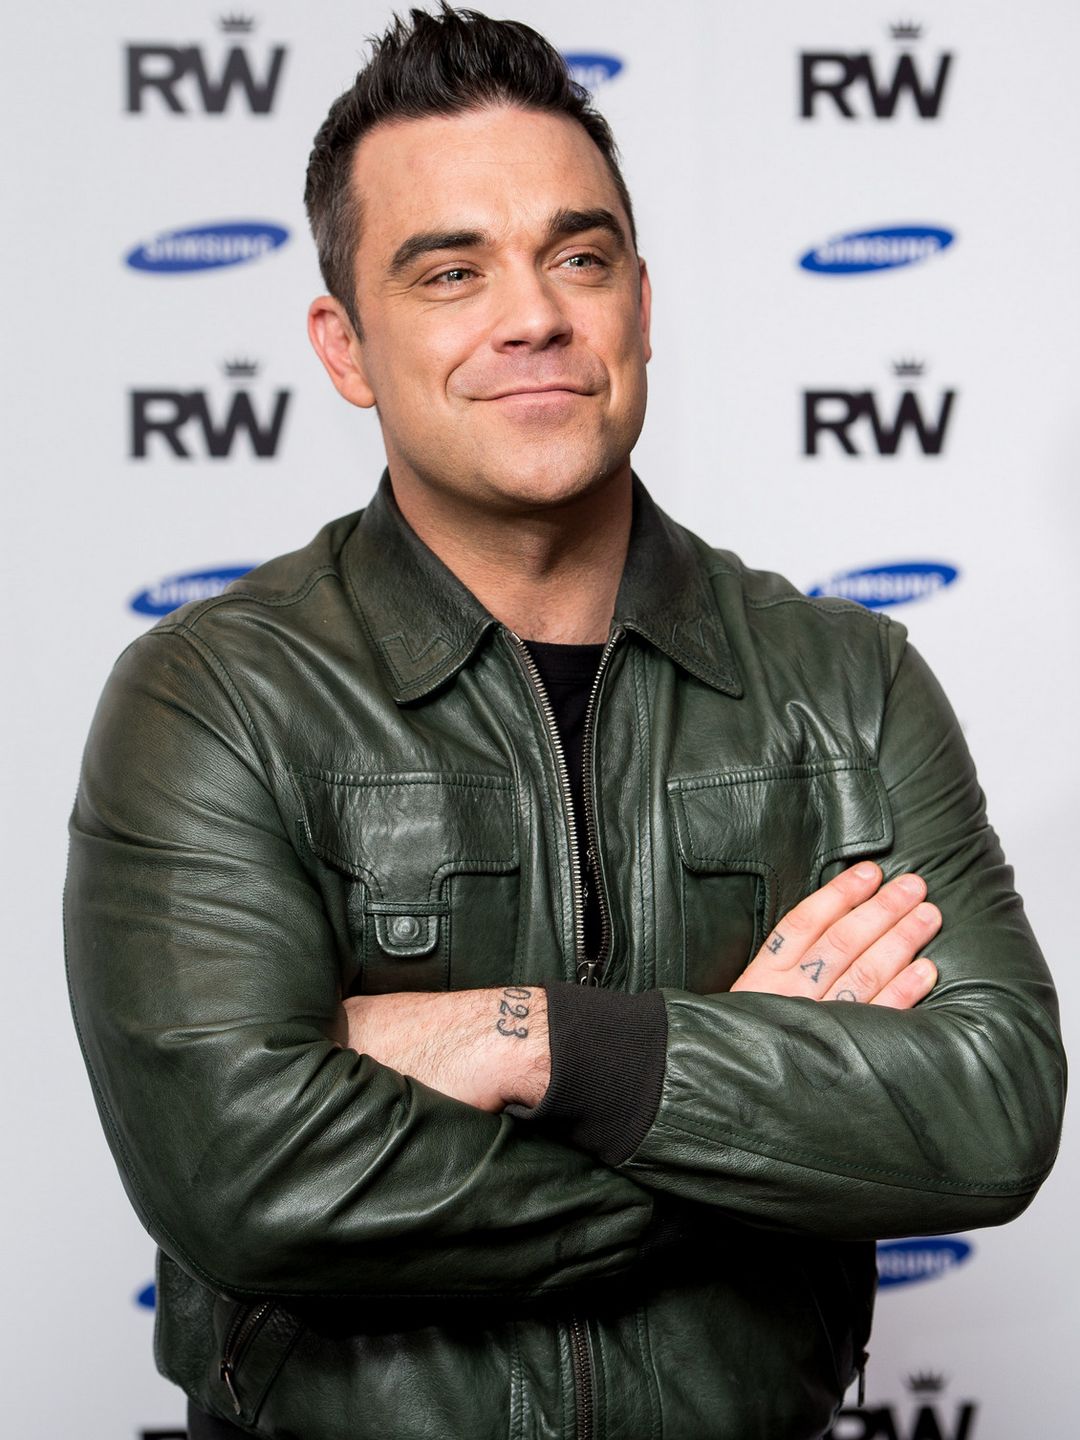 Robbie Williams relationship